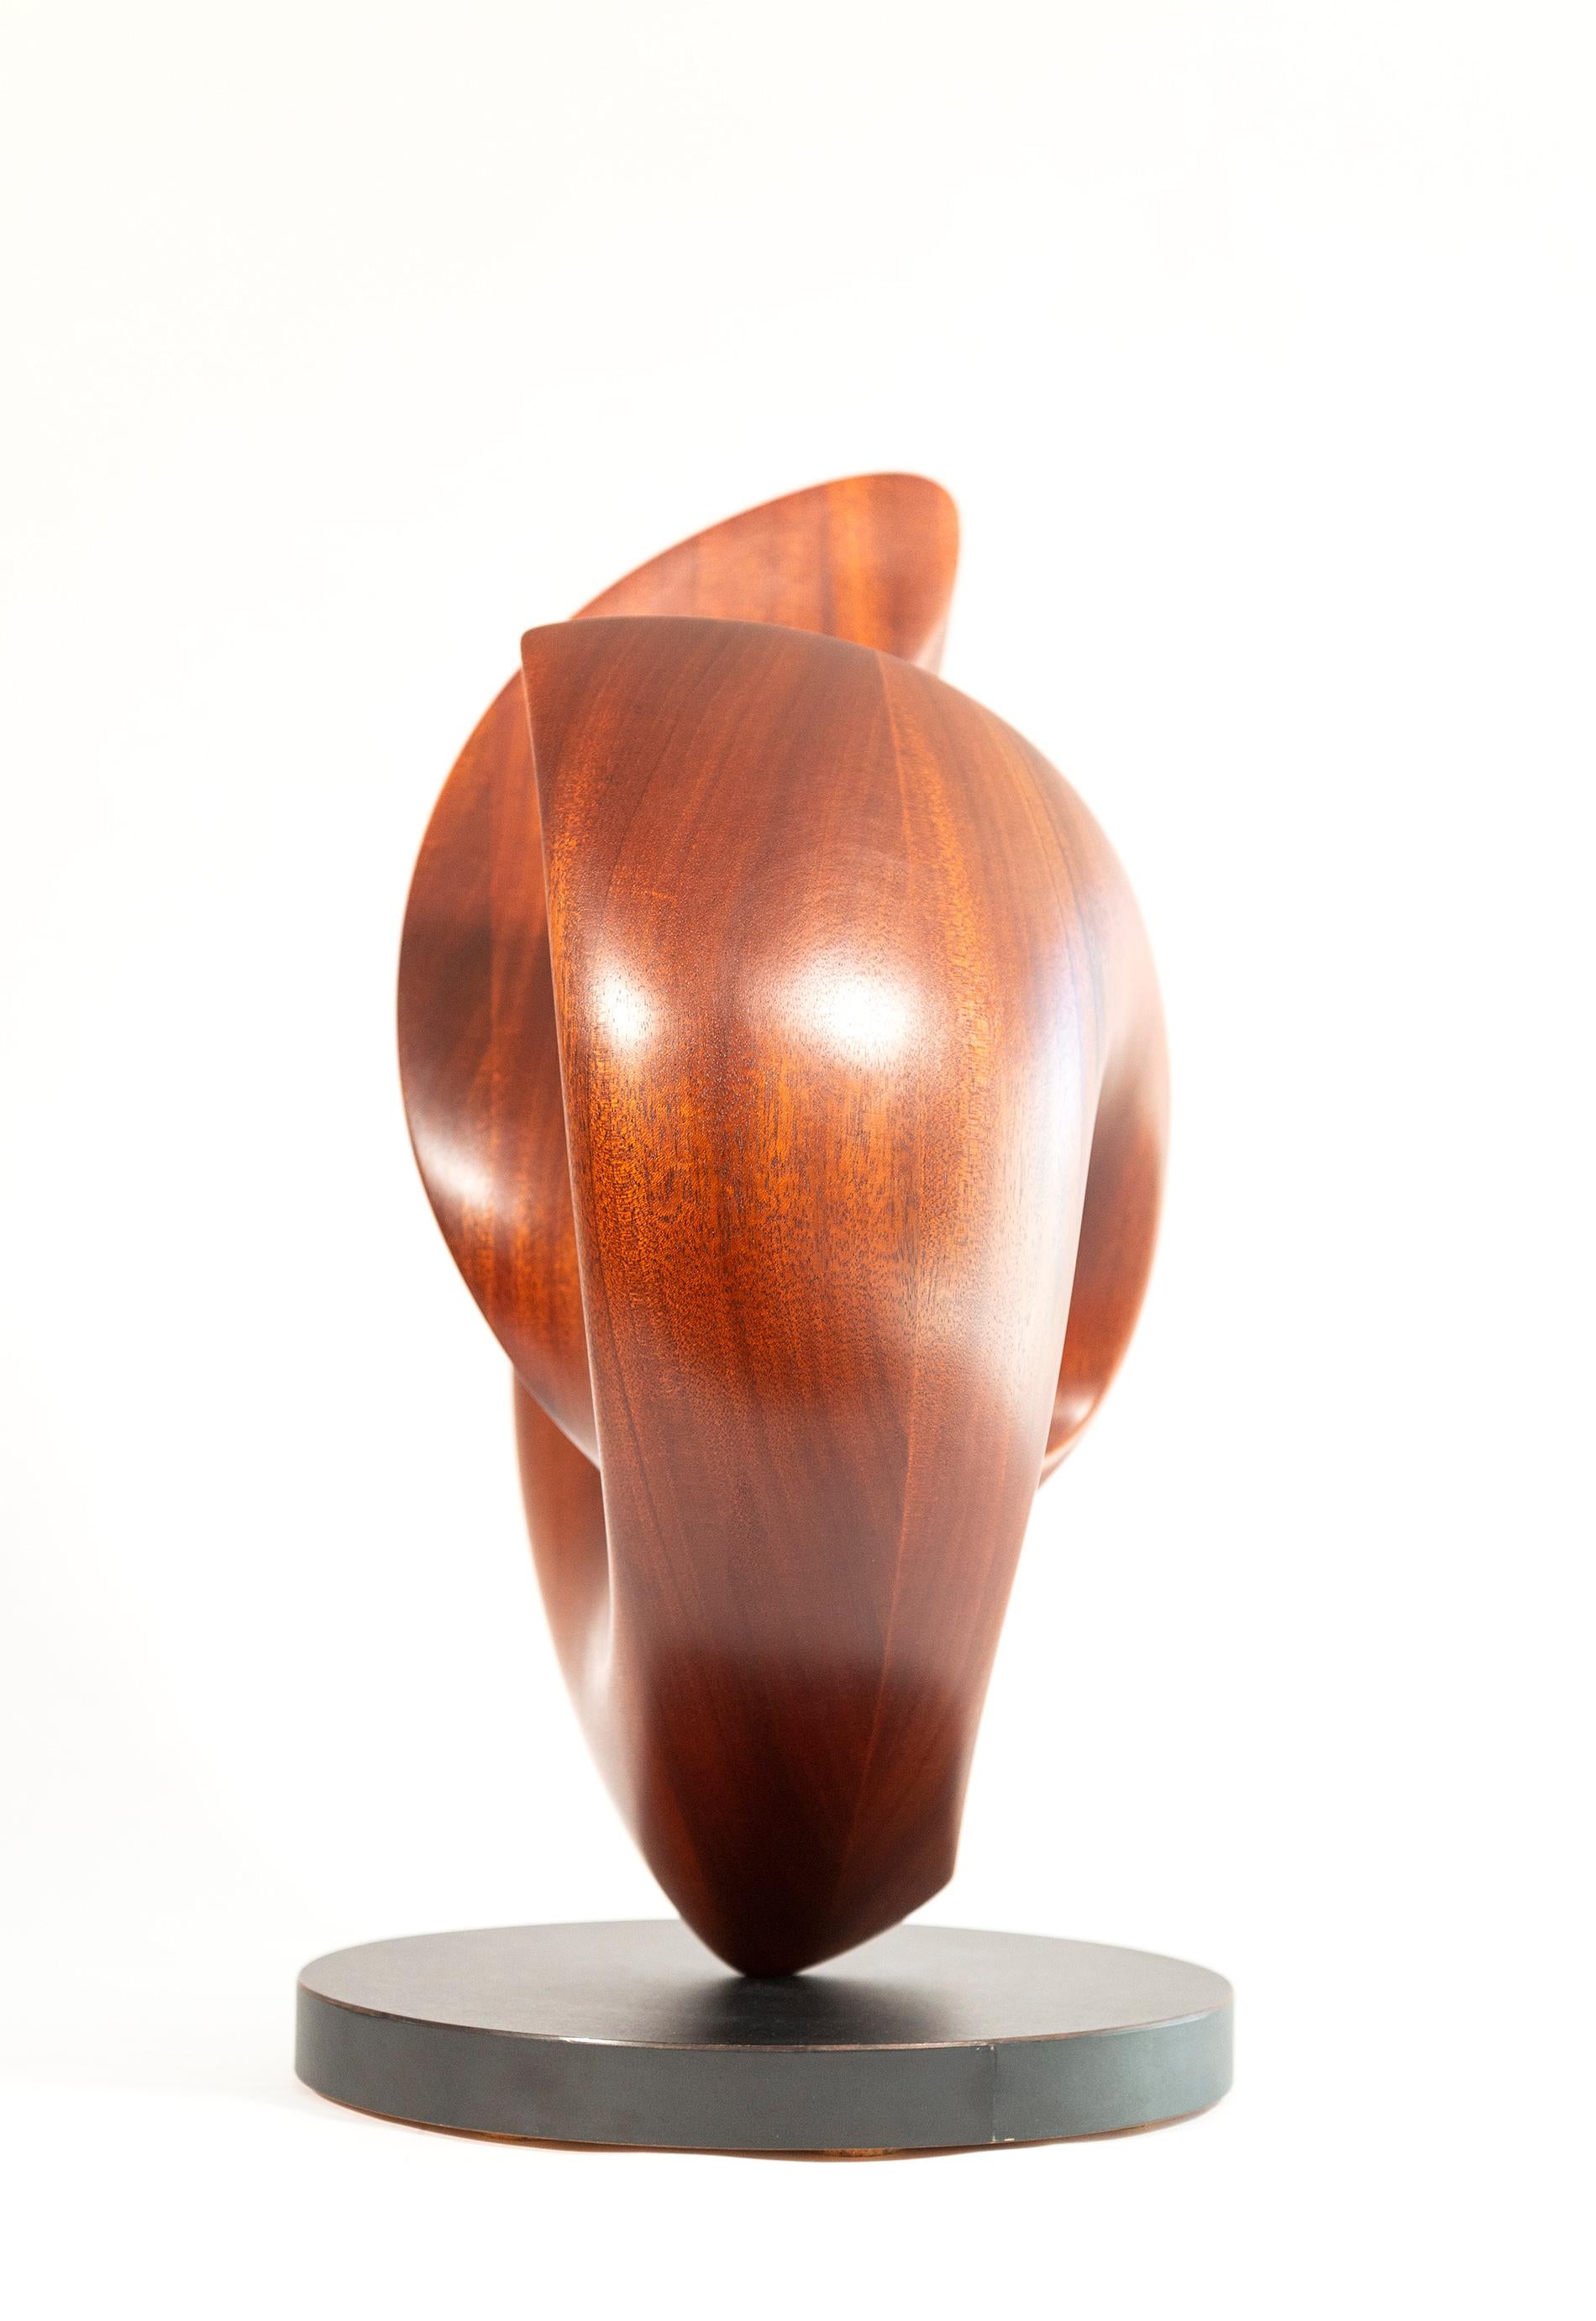 Senza Misura - smooth, polished, abstract, contemporary, mahogany sculpture - Abstract Sculpture by David Chamberlain